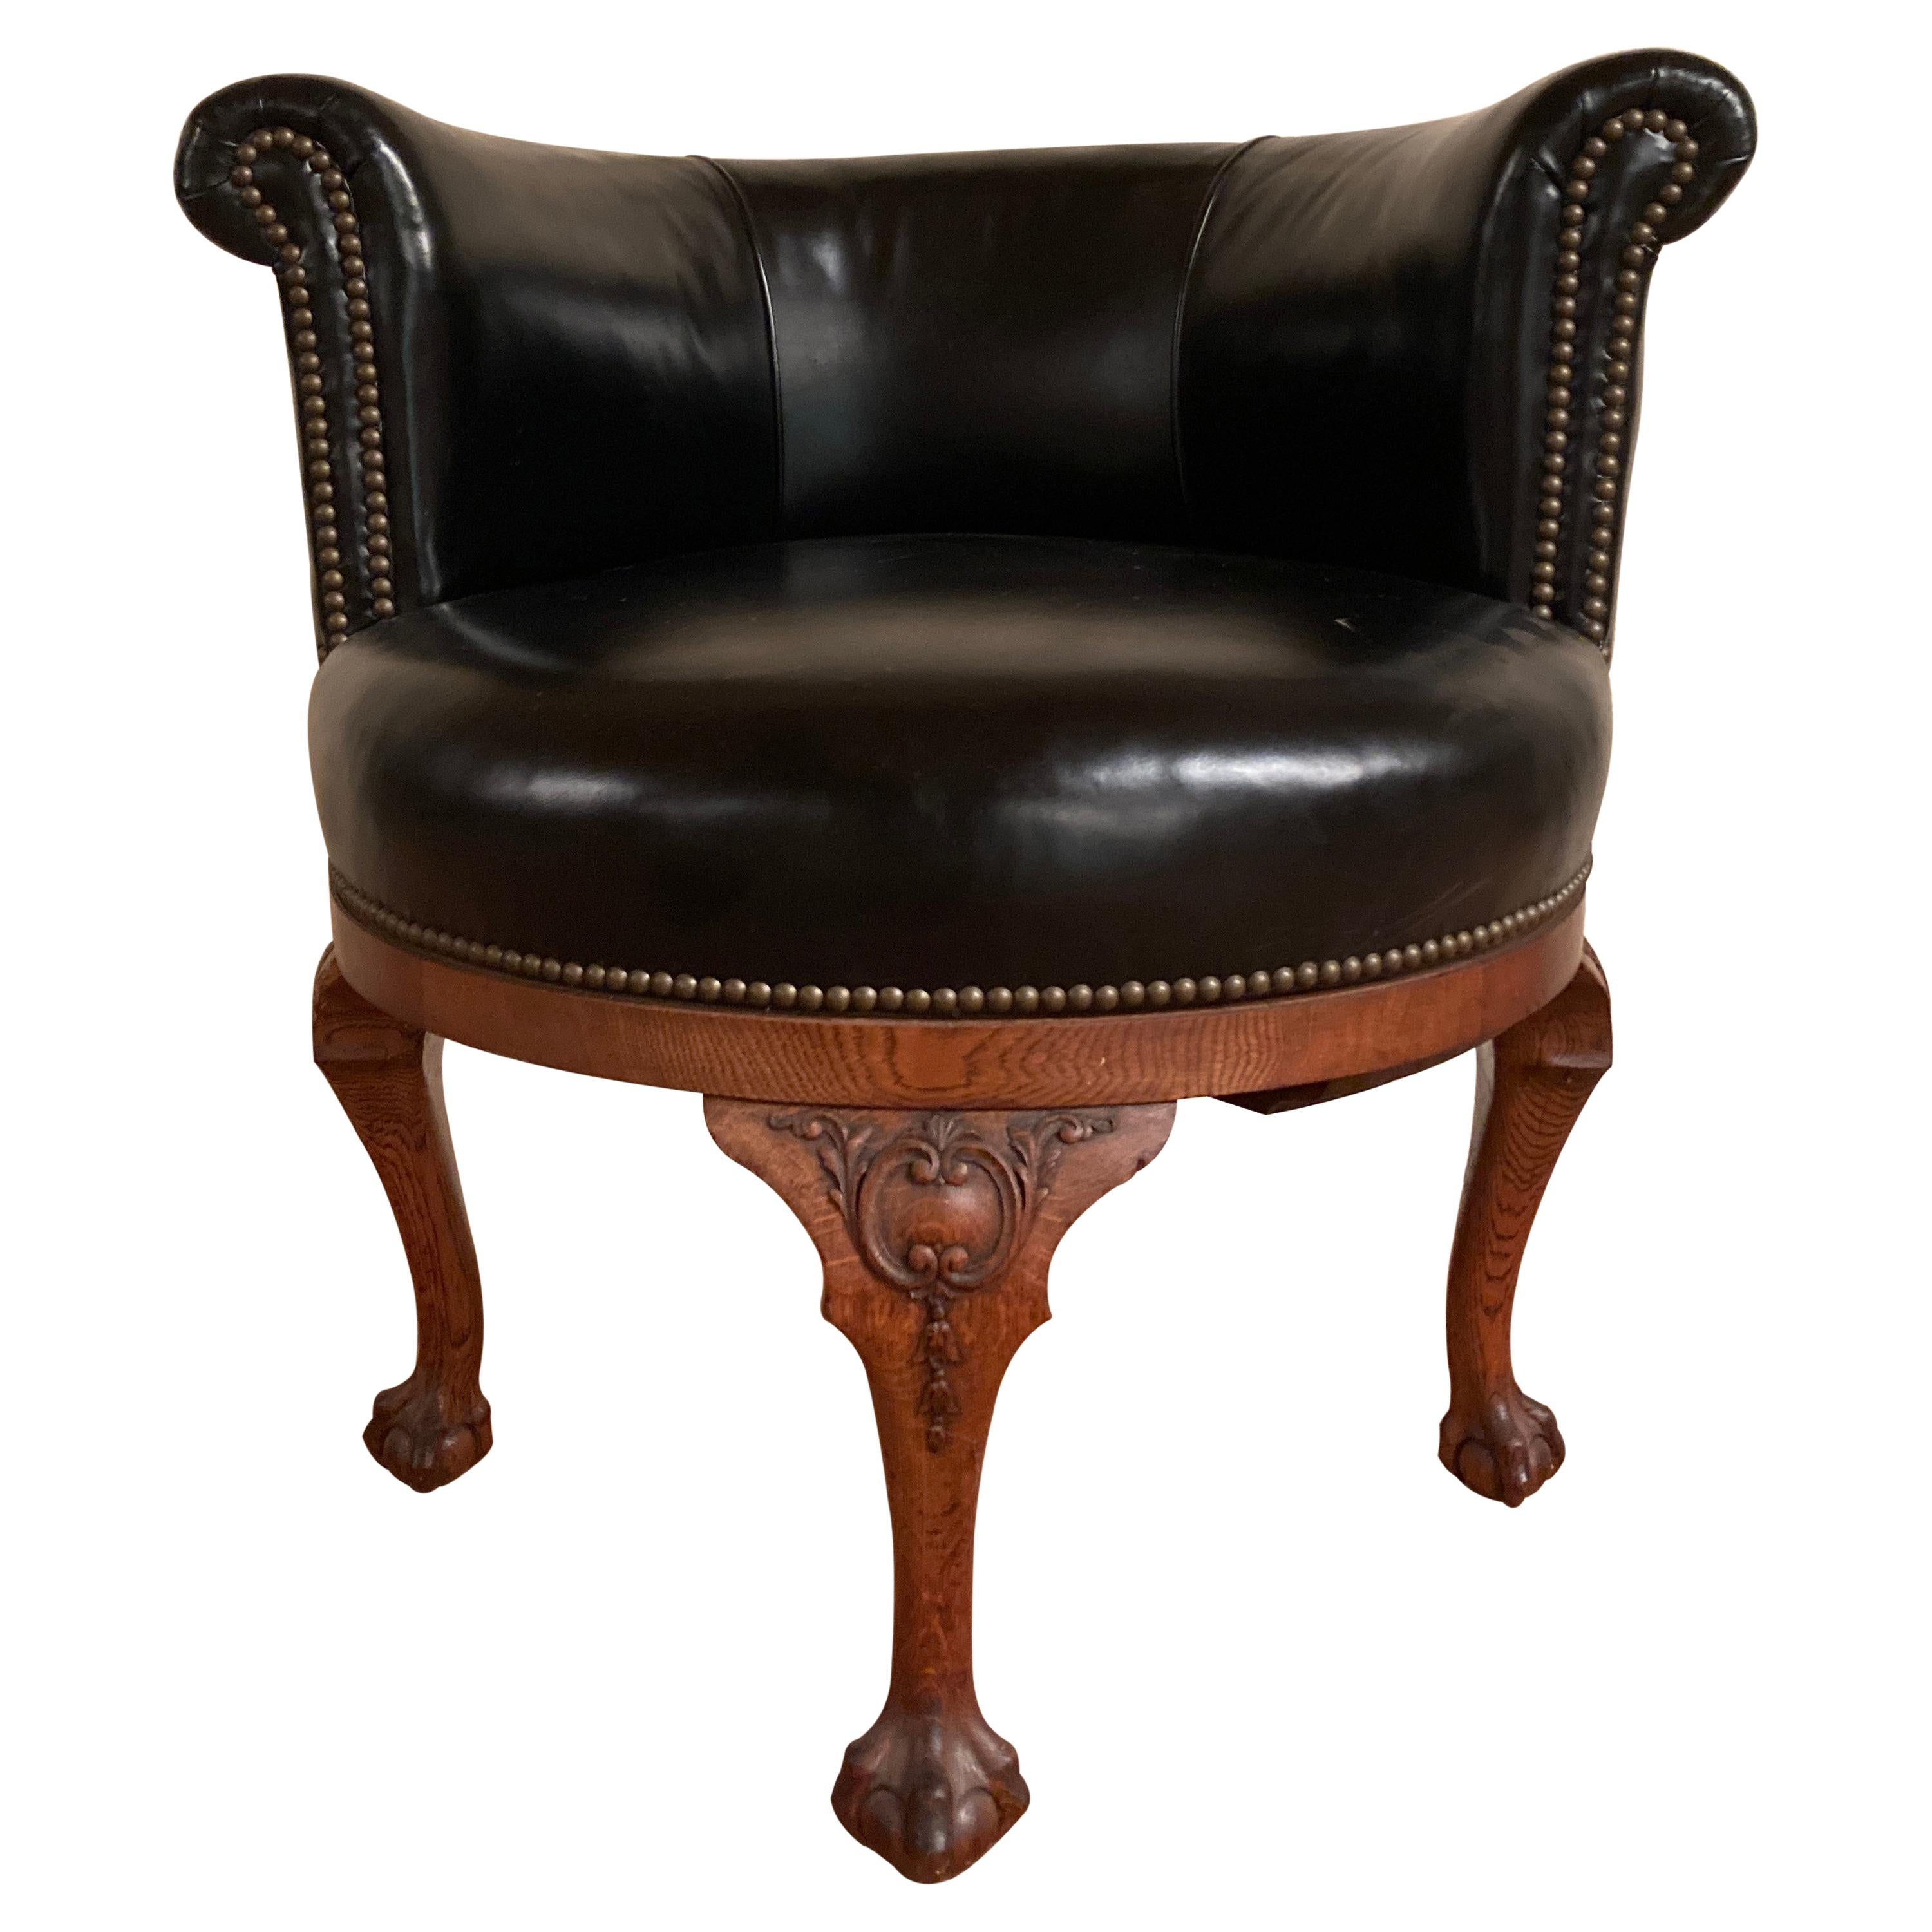 English George II Style Swivel Desk Chair